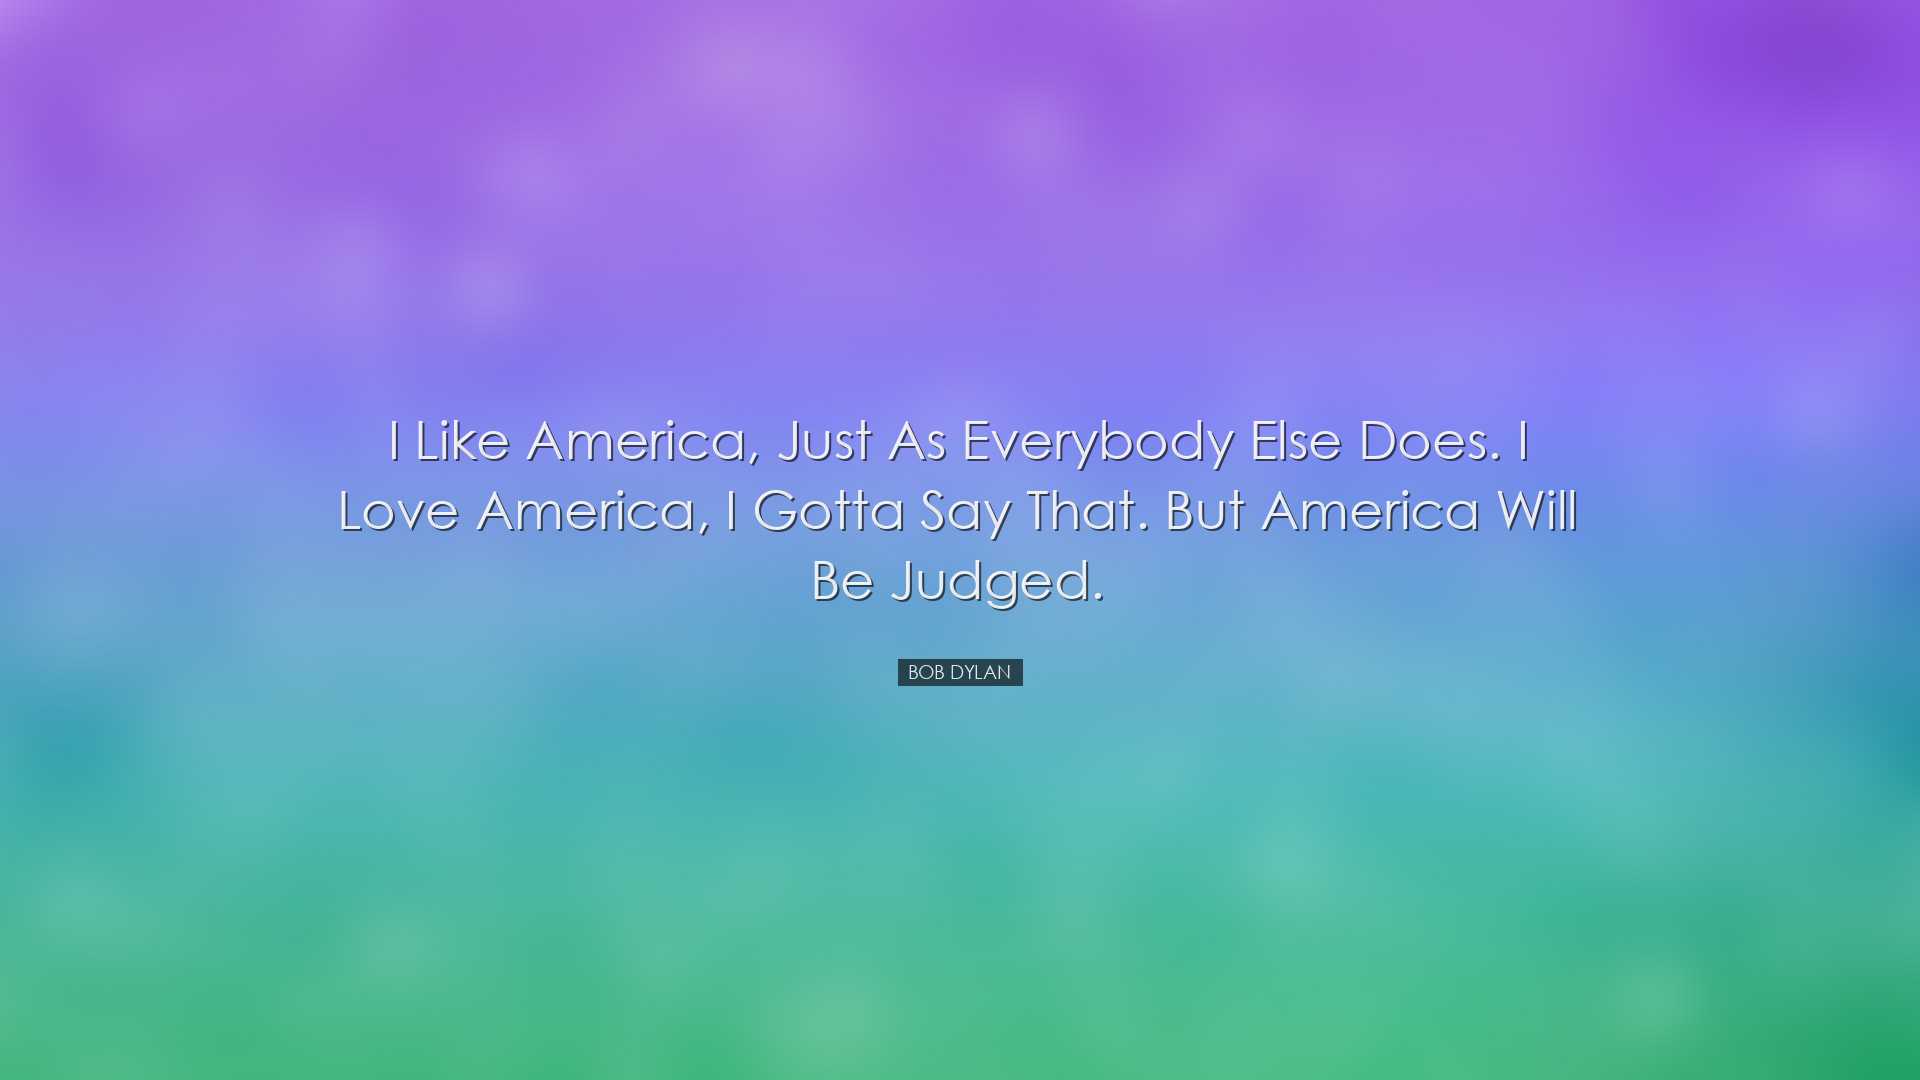 I like America, just as everybody else does. I love America, I got